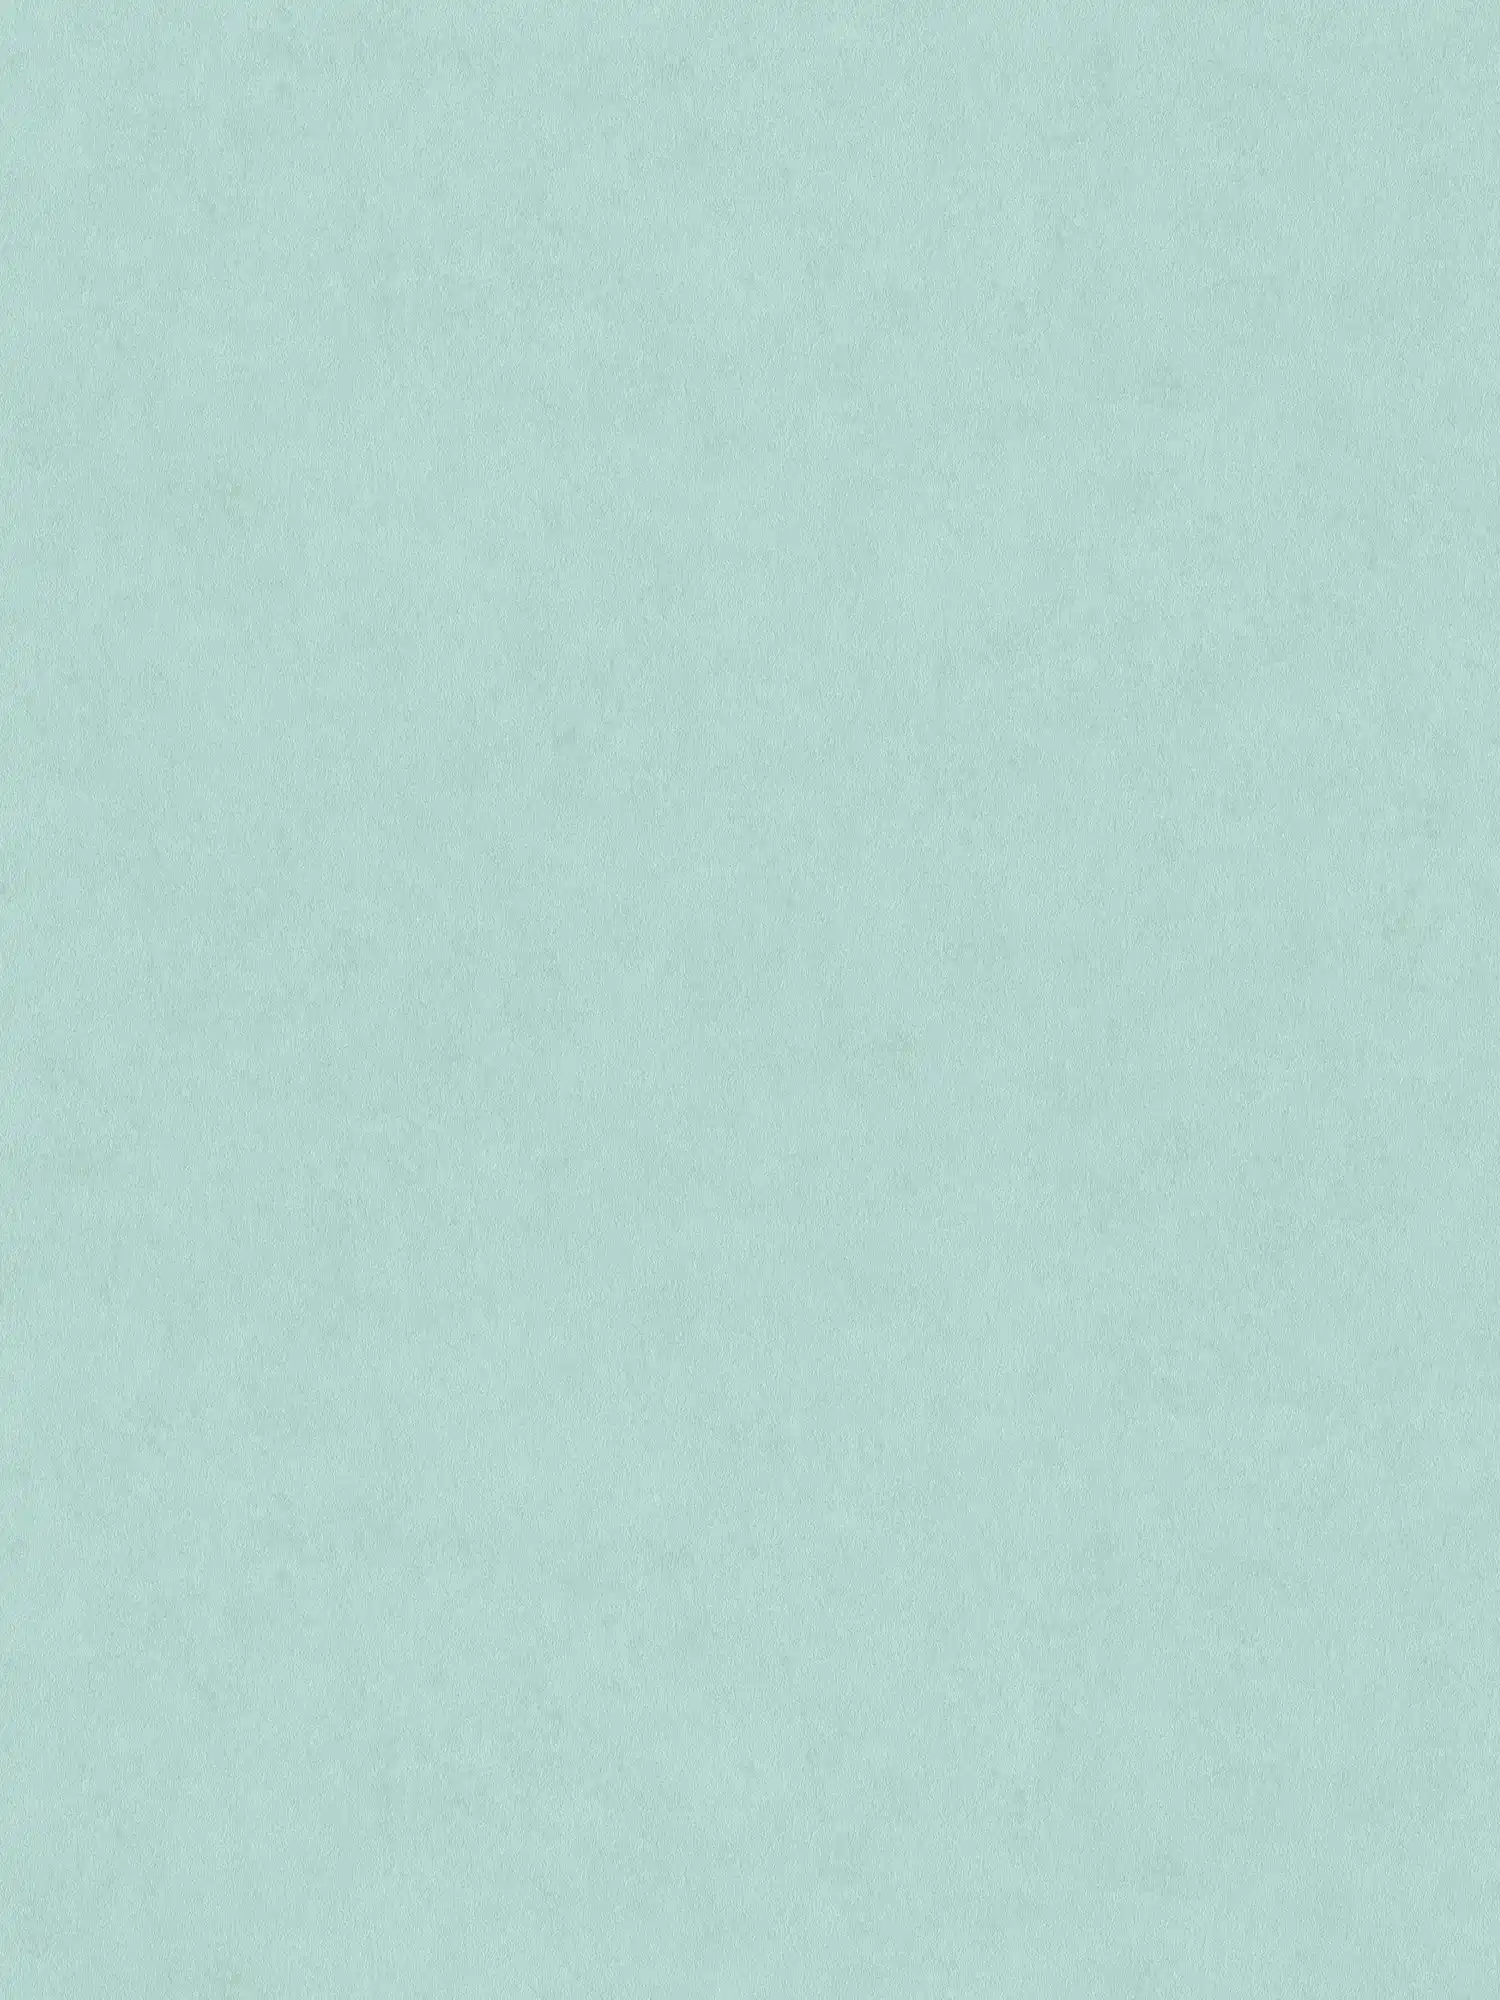 Plain non-woven wallpaper - turquoise
